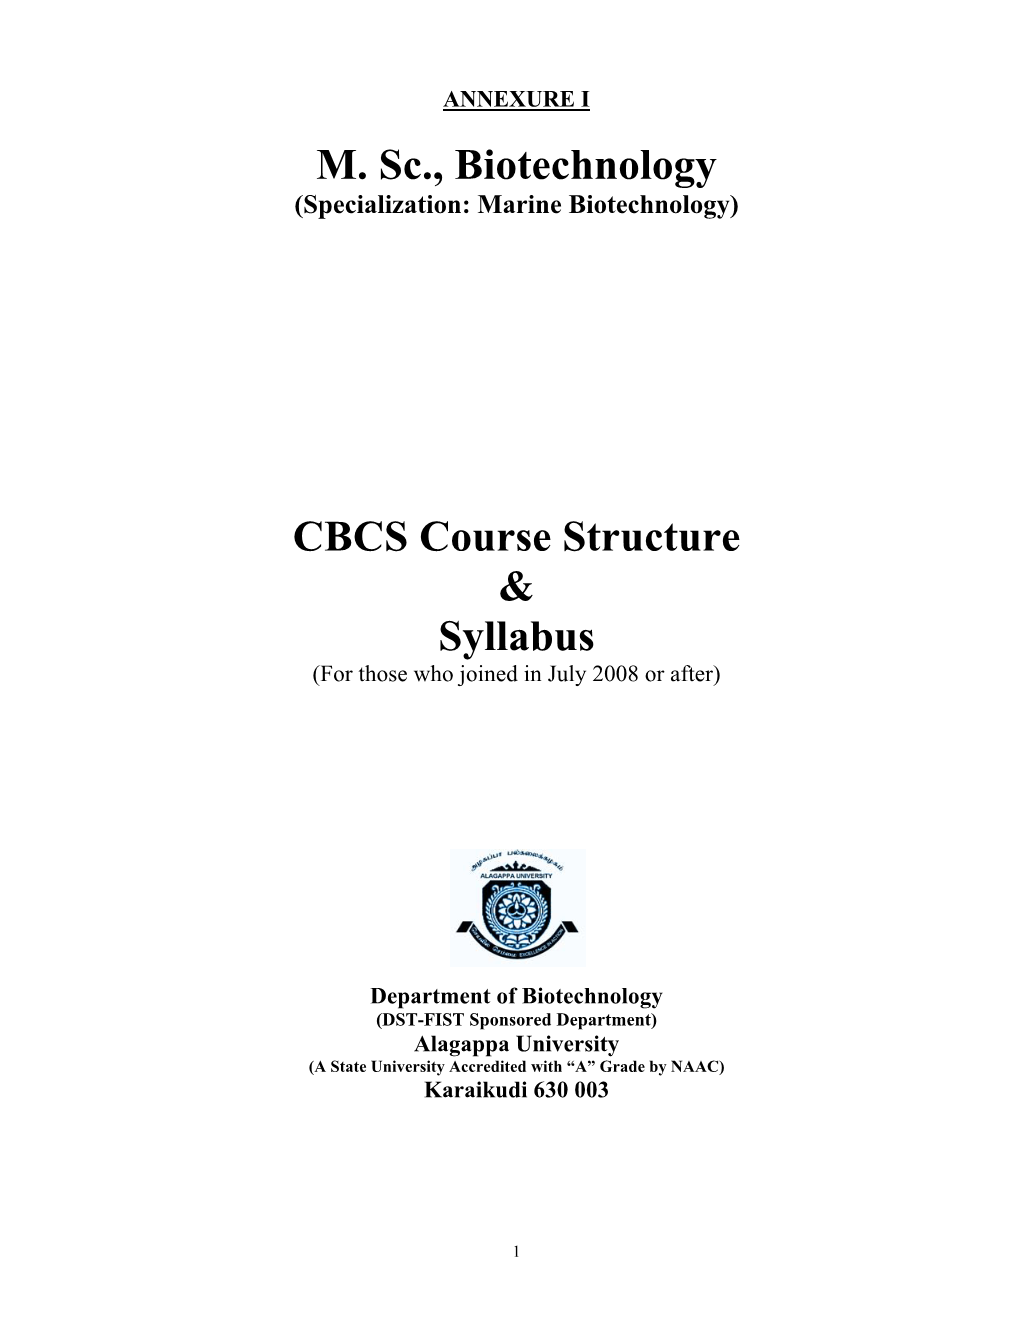 M. Sc., Biotechnology CBCS Course Structure & Syllabus